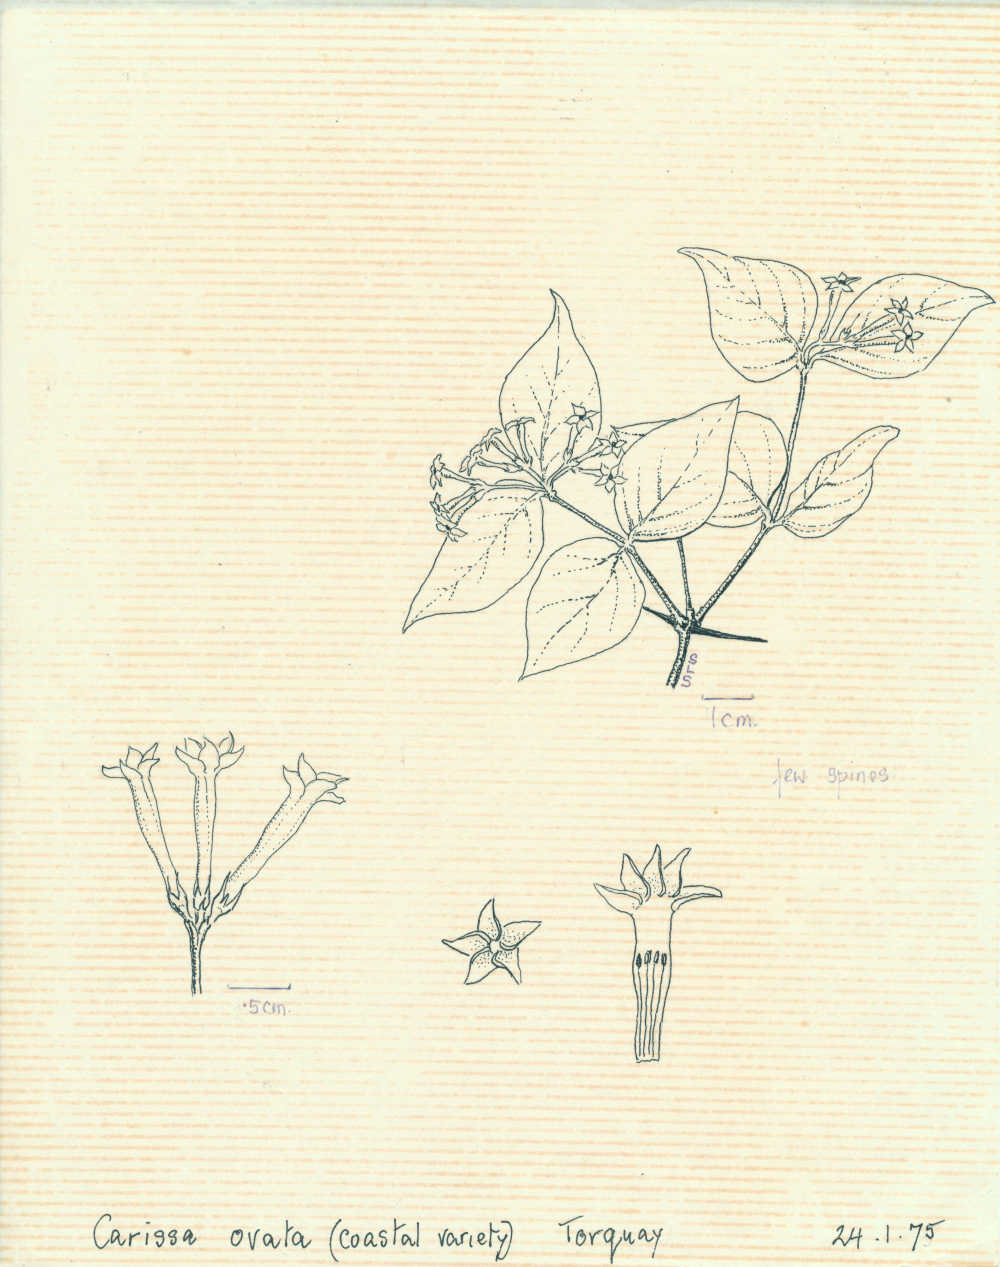 Carissa ovata | Carissa ovata, depiction by Sylvia Seiler, Killara, West Boondooma, Qld | Queensland Native Seeds